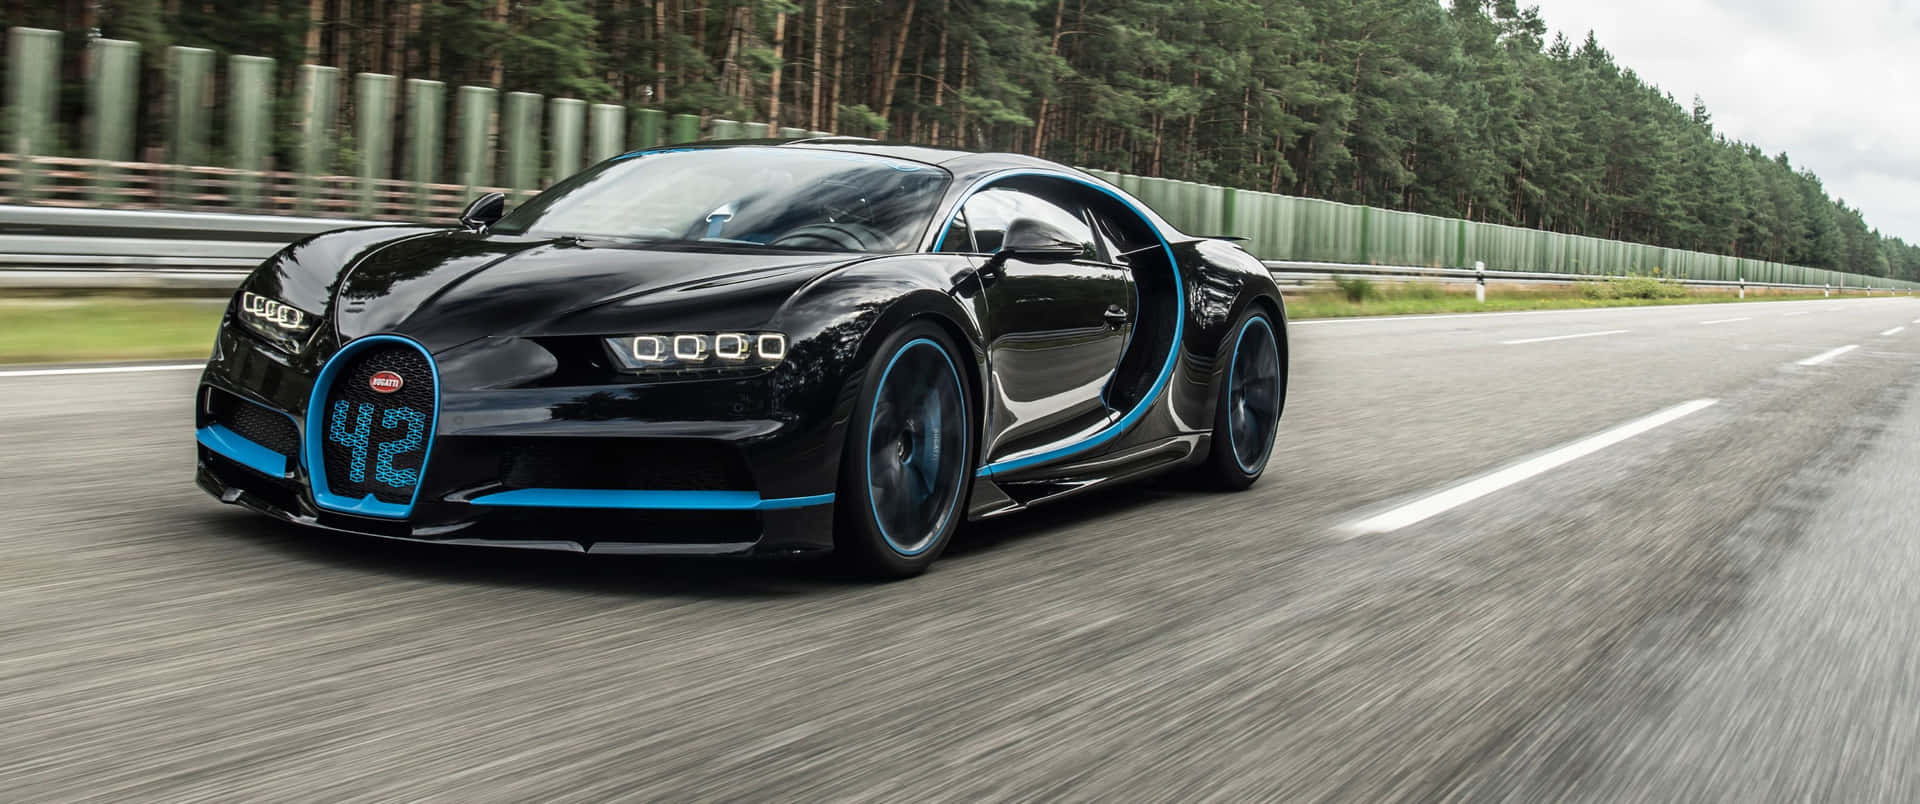 Classic Bugatti luxury at its finest